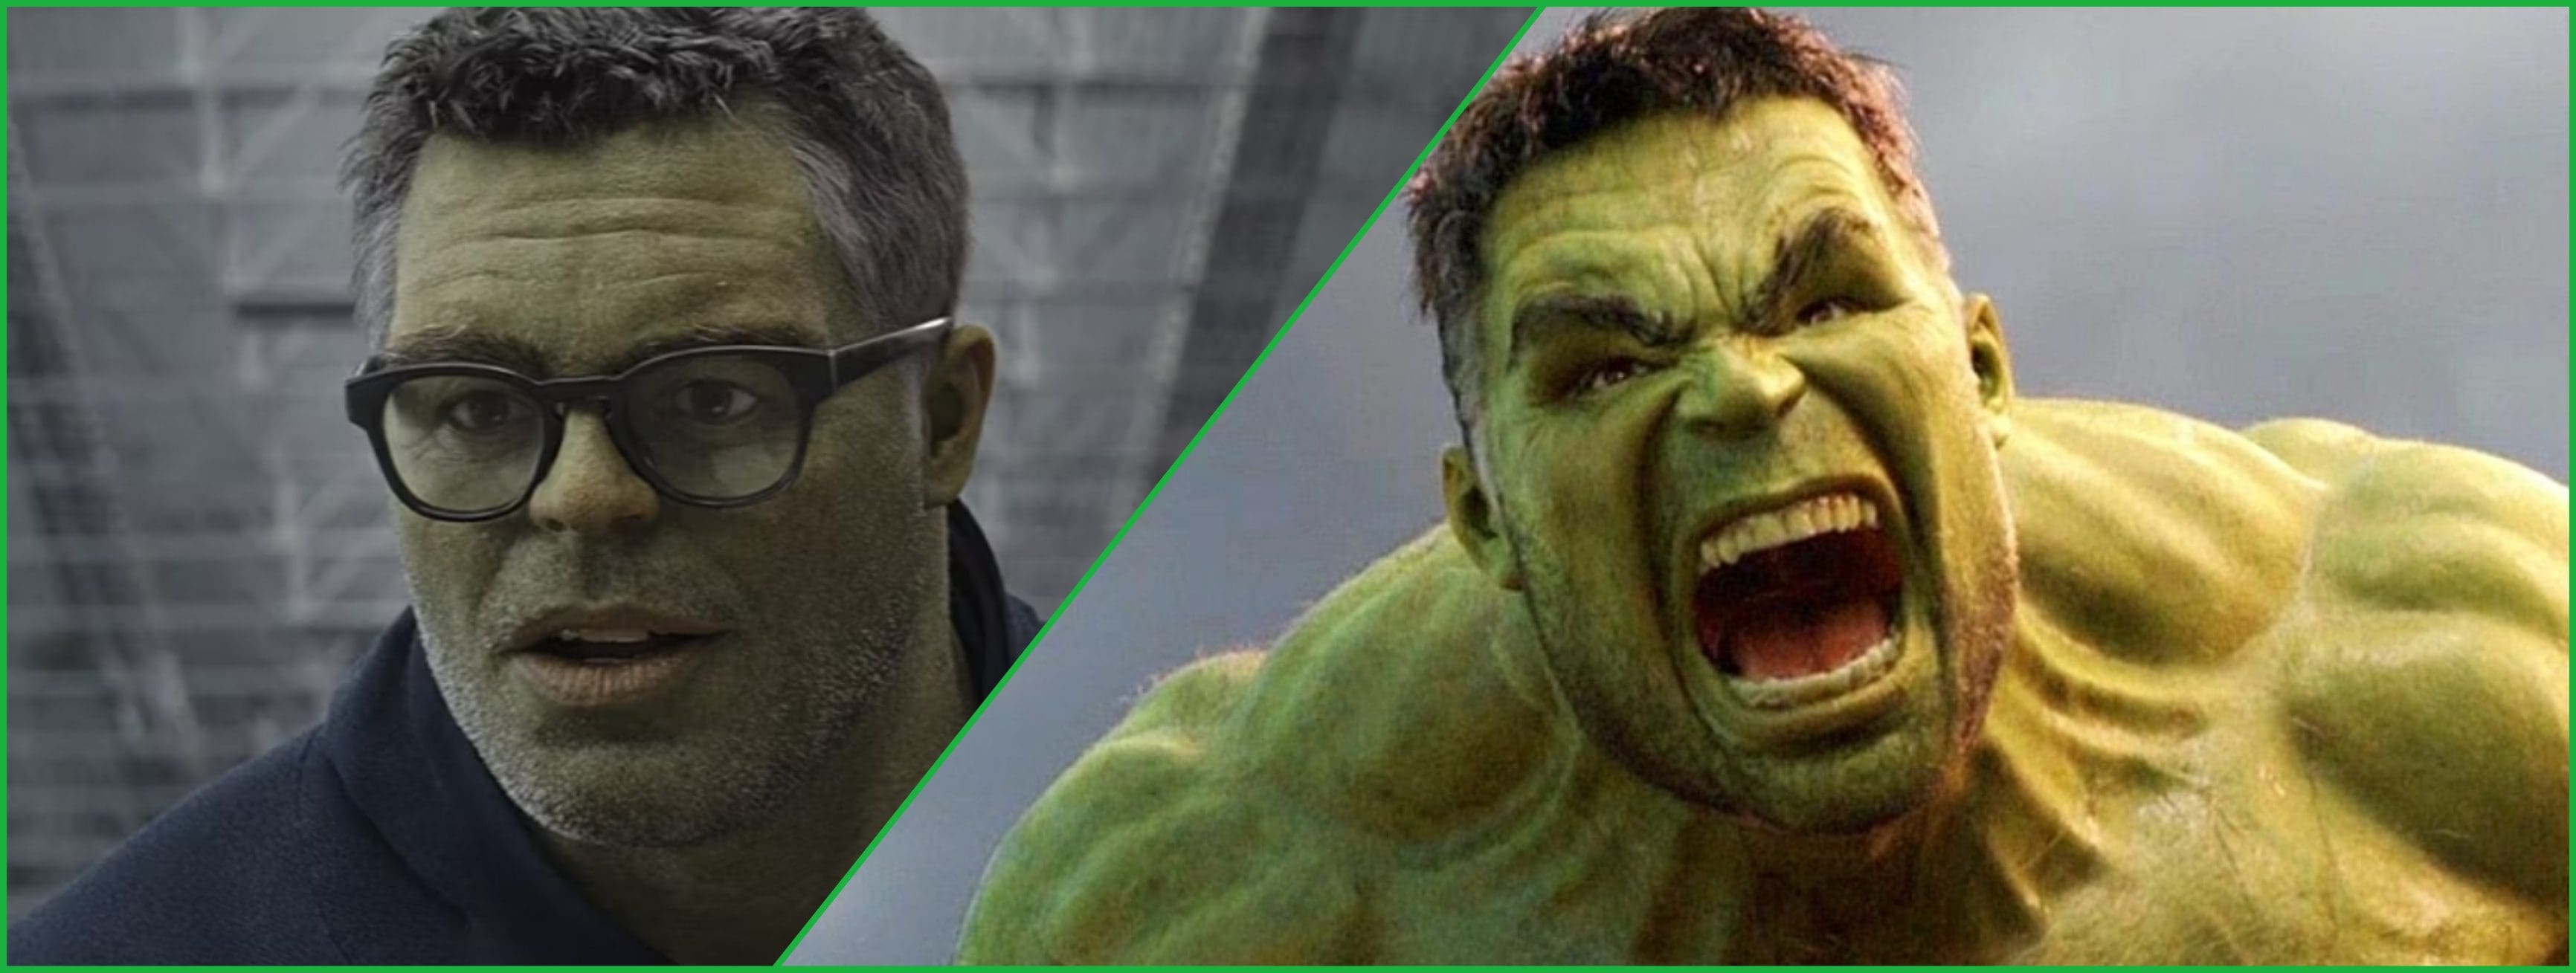 Could She-Hulk Disney+ Series Set Up World War Hulk Movie?